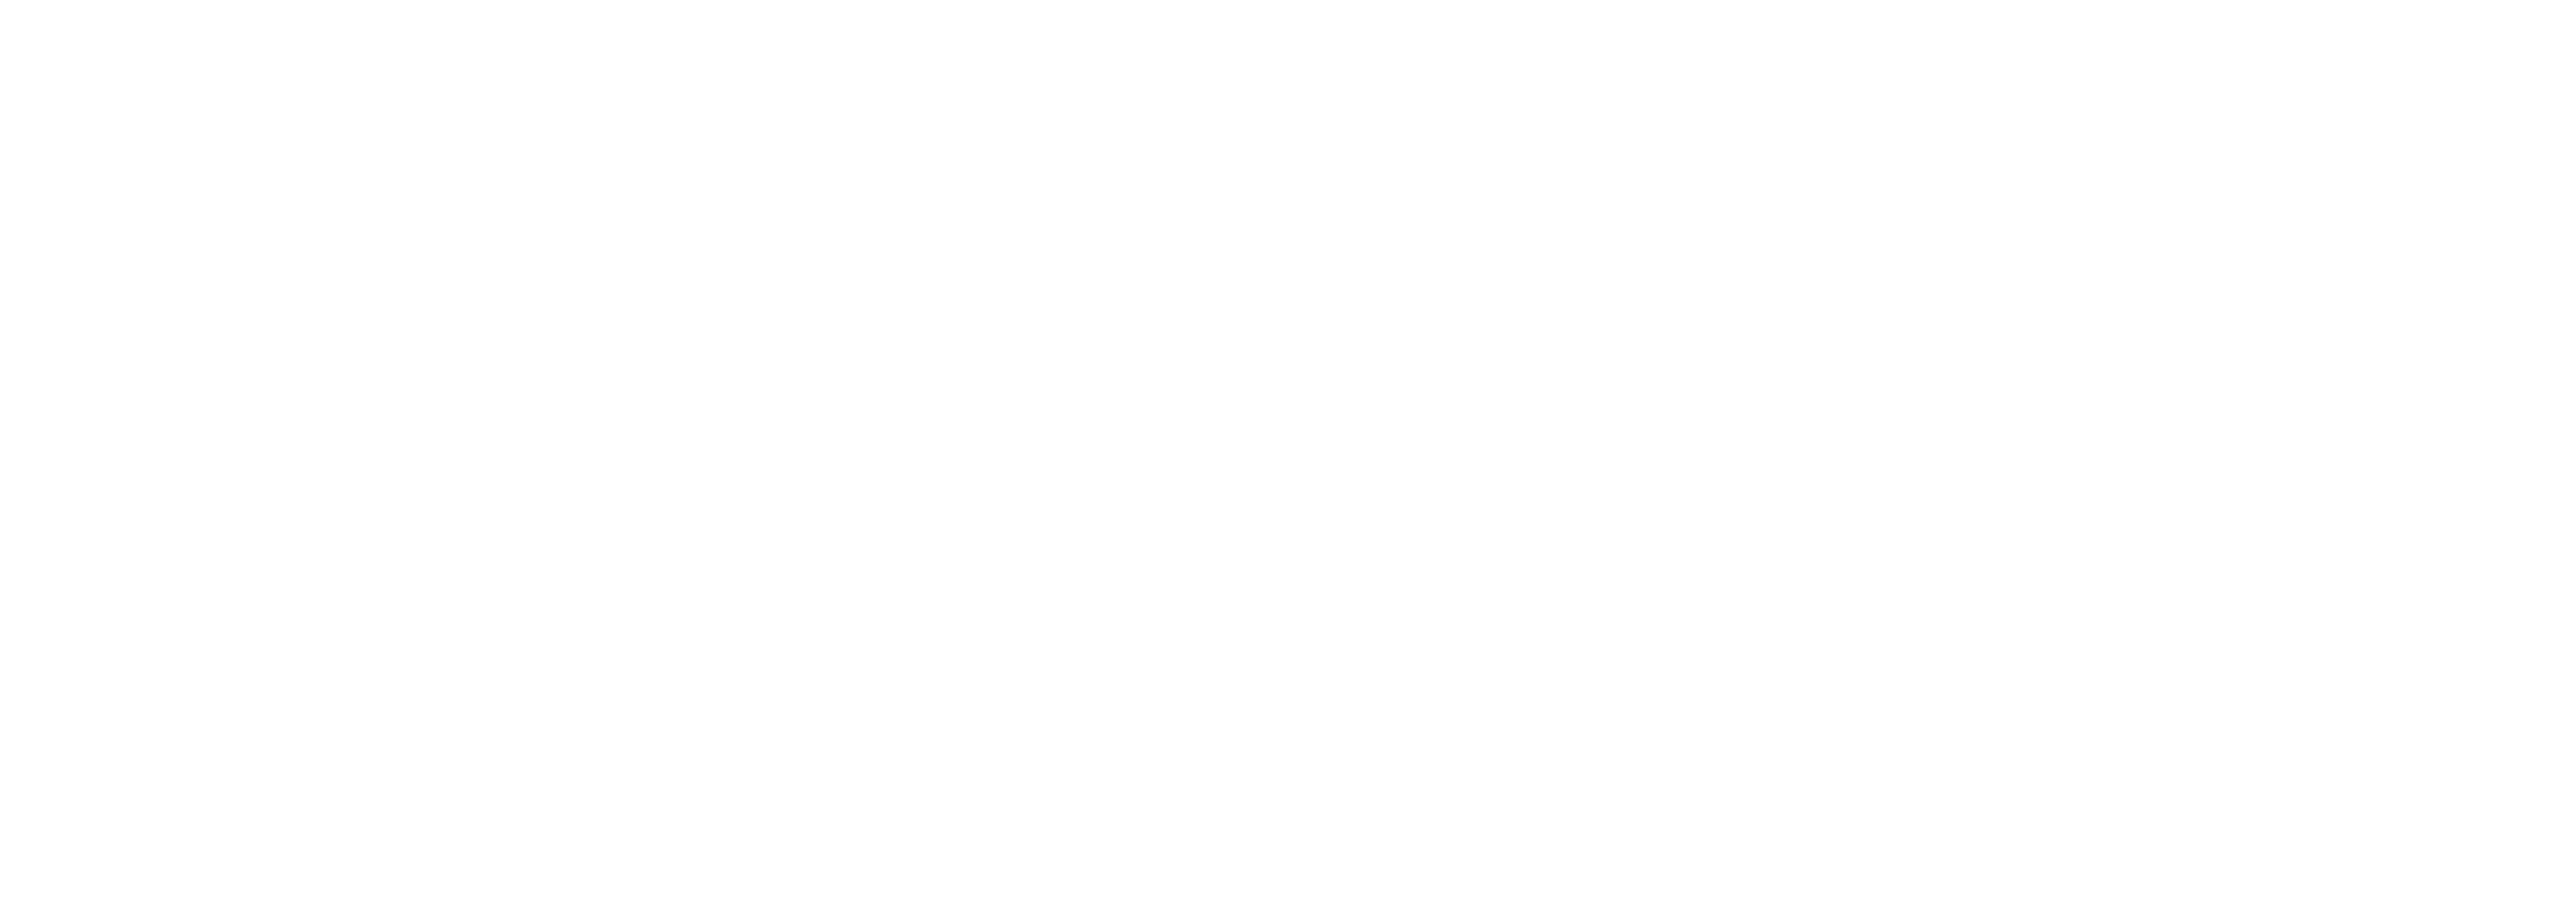 Miley Cyrus - Endless Summer Vacation (Backyard Sessions) logo